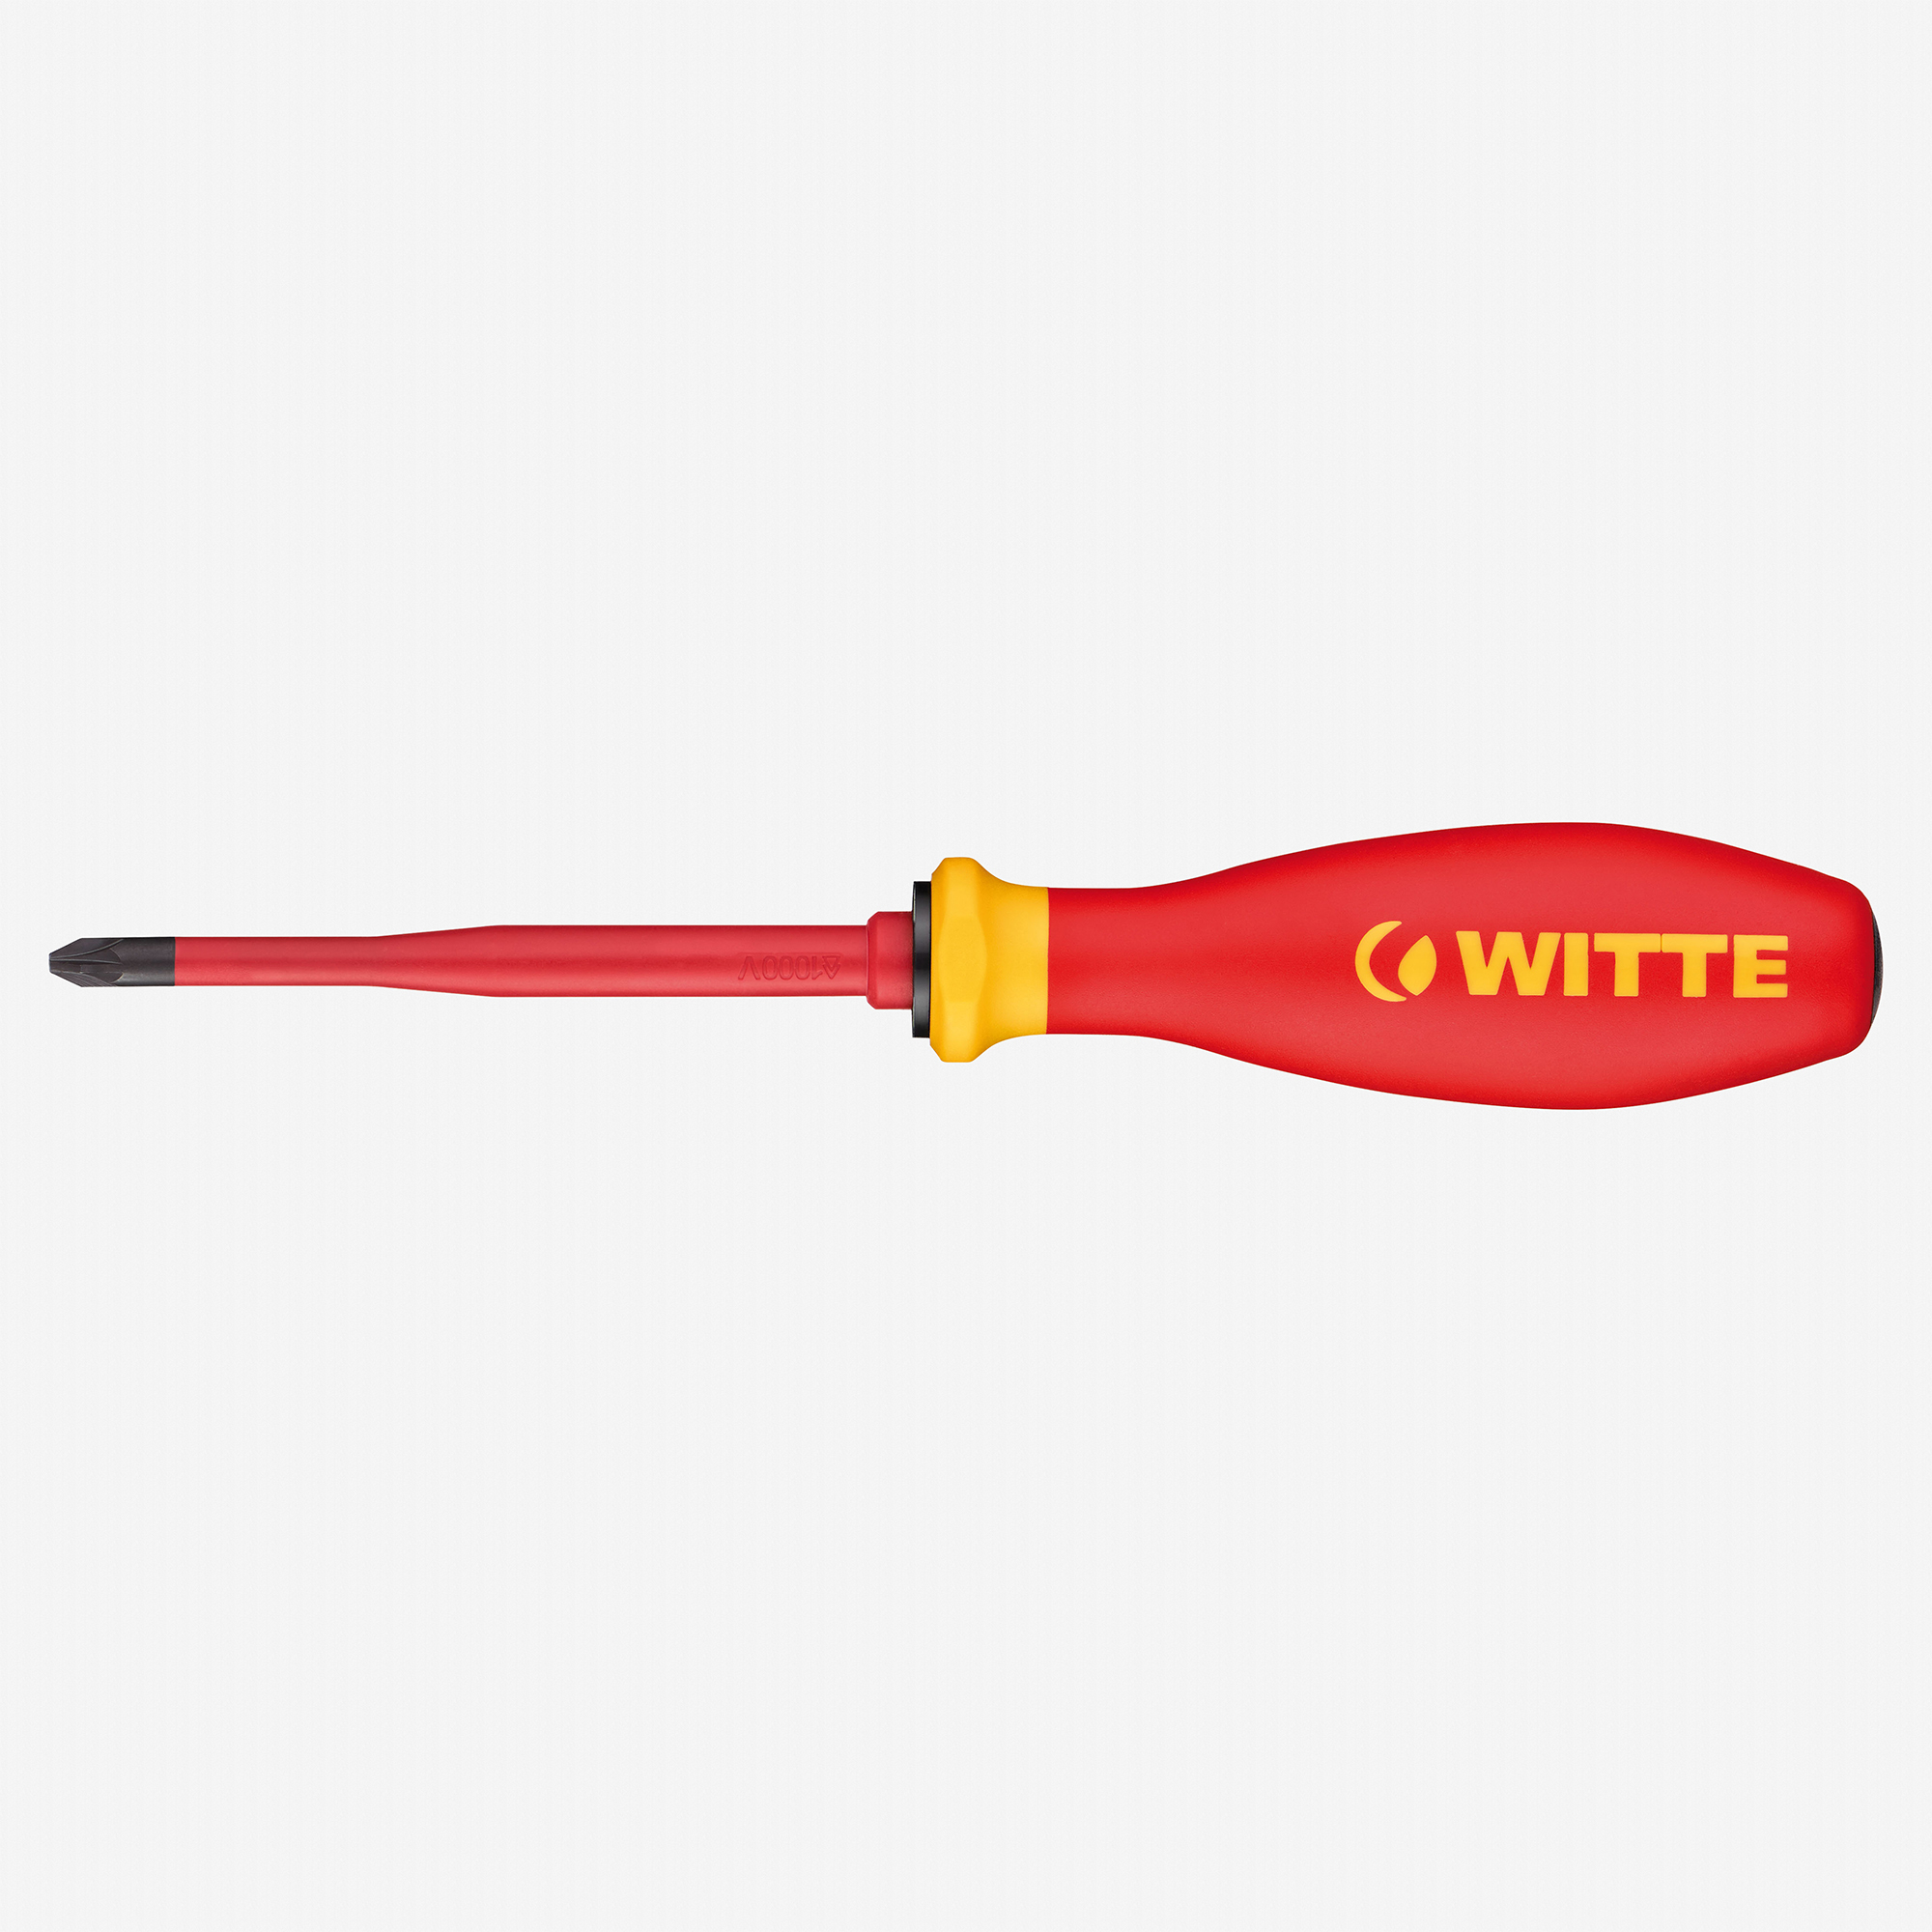 Witte 76033 Pro VDE Slim Pozidriv Screwdriver, #2 x 100mm - KC Tool